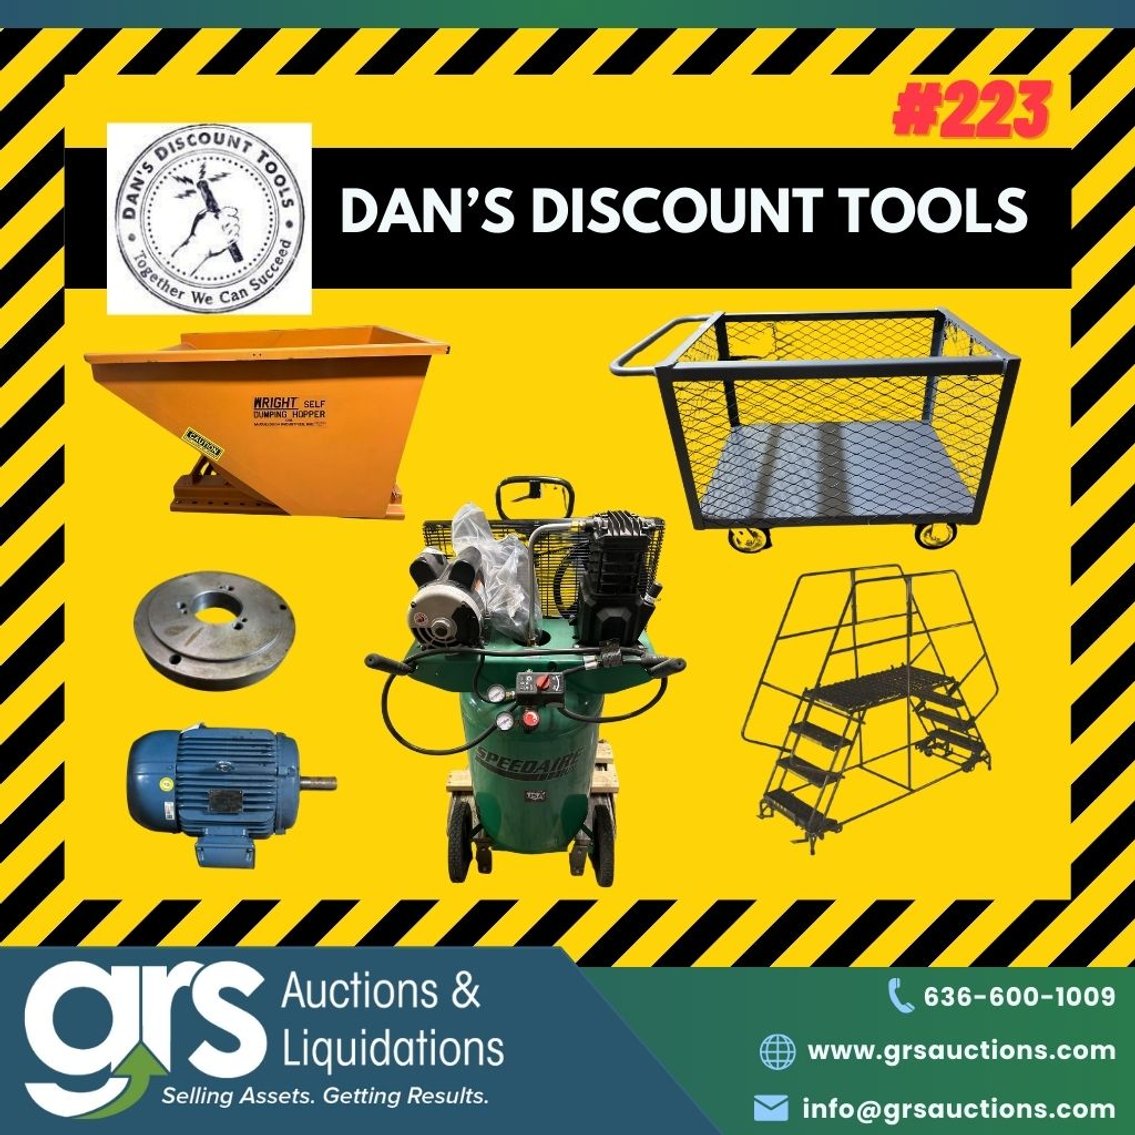 Dan's Discount Tools #223